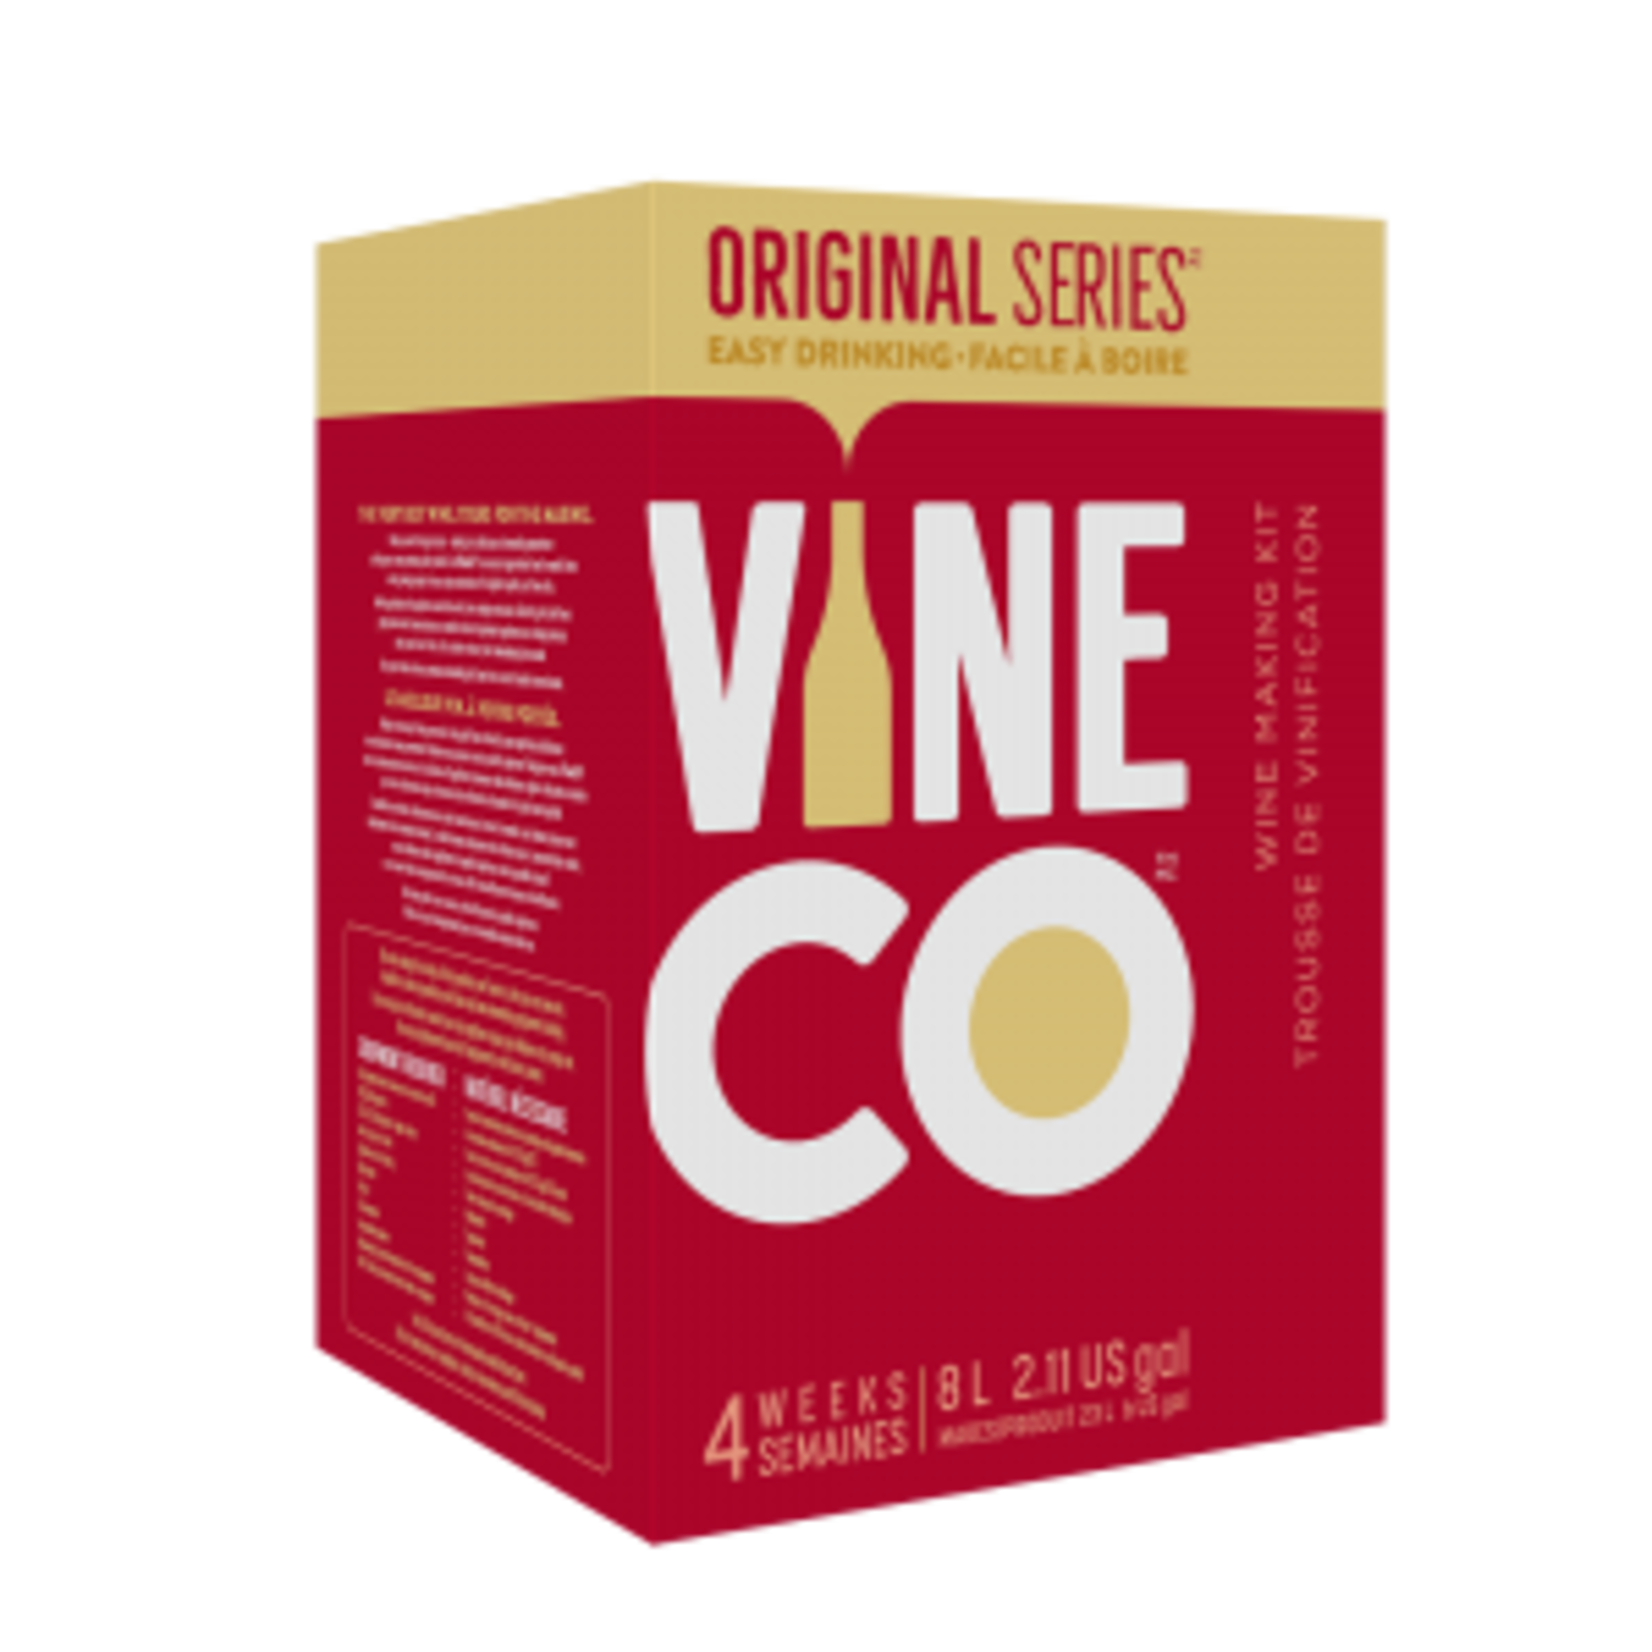 Vine Co. Original Series Tempranillo (Wine Kit), Spain